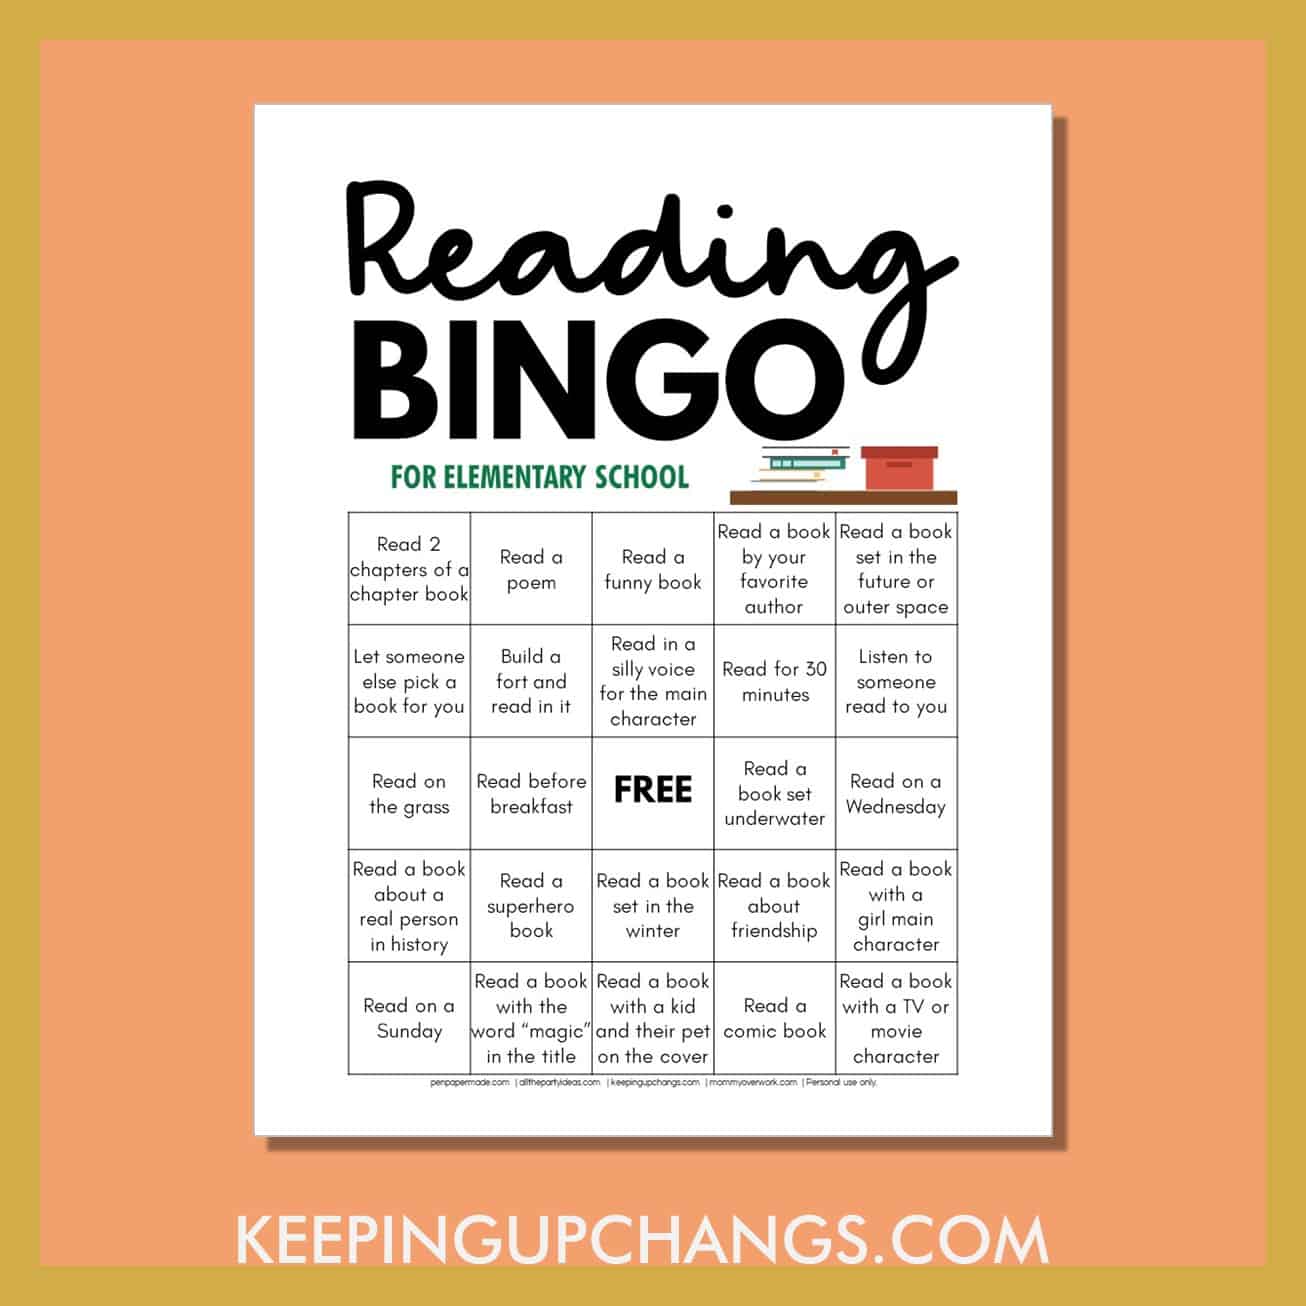 elementary school reading bingo challenge with fun ways to enjoy reading.